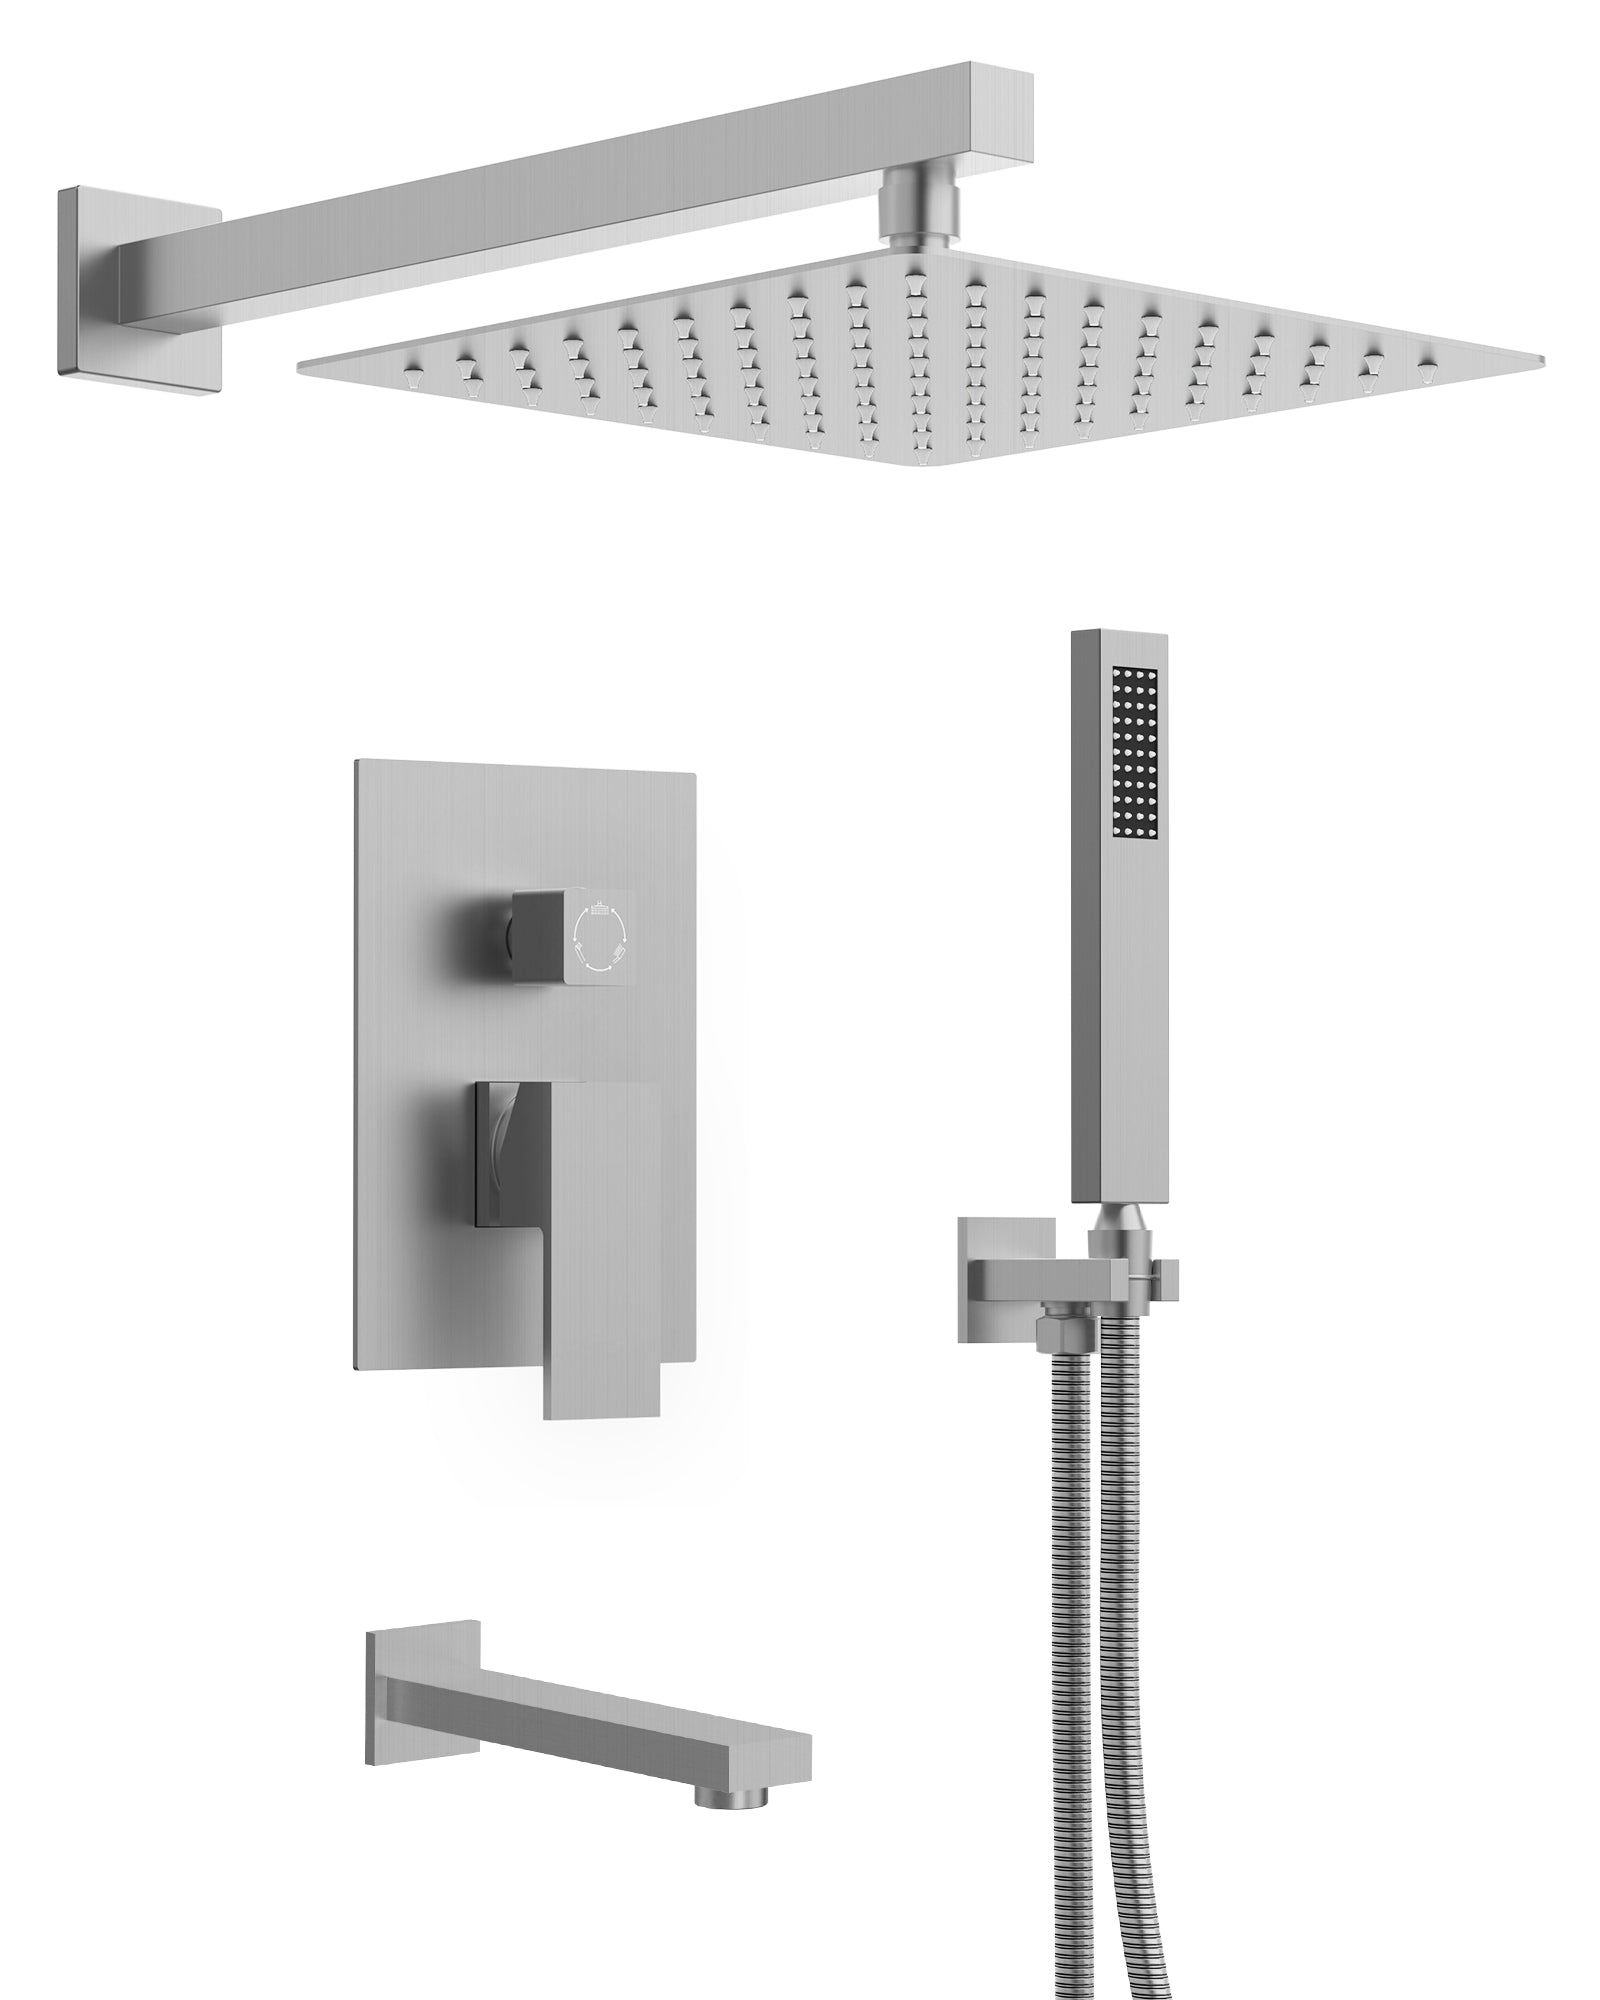 EVERSTEIN Brushed Nickel Luxury Shower & Tub Faucet Set - 10" Ceiling Rain Head, High-Pressure Bathroom Waterfall Bathtub Spout